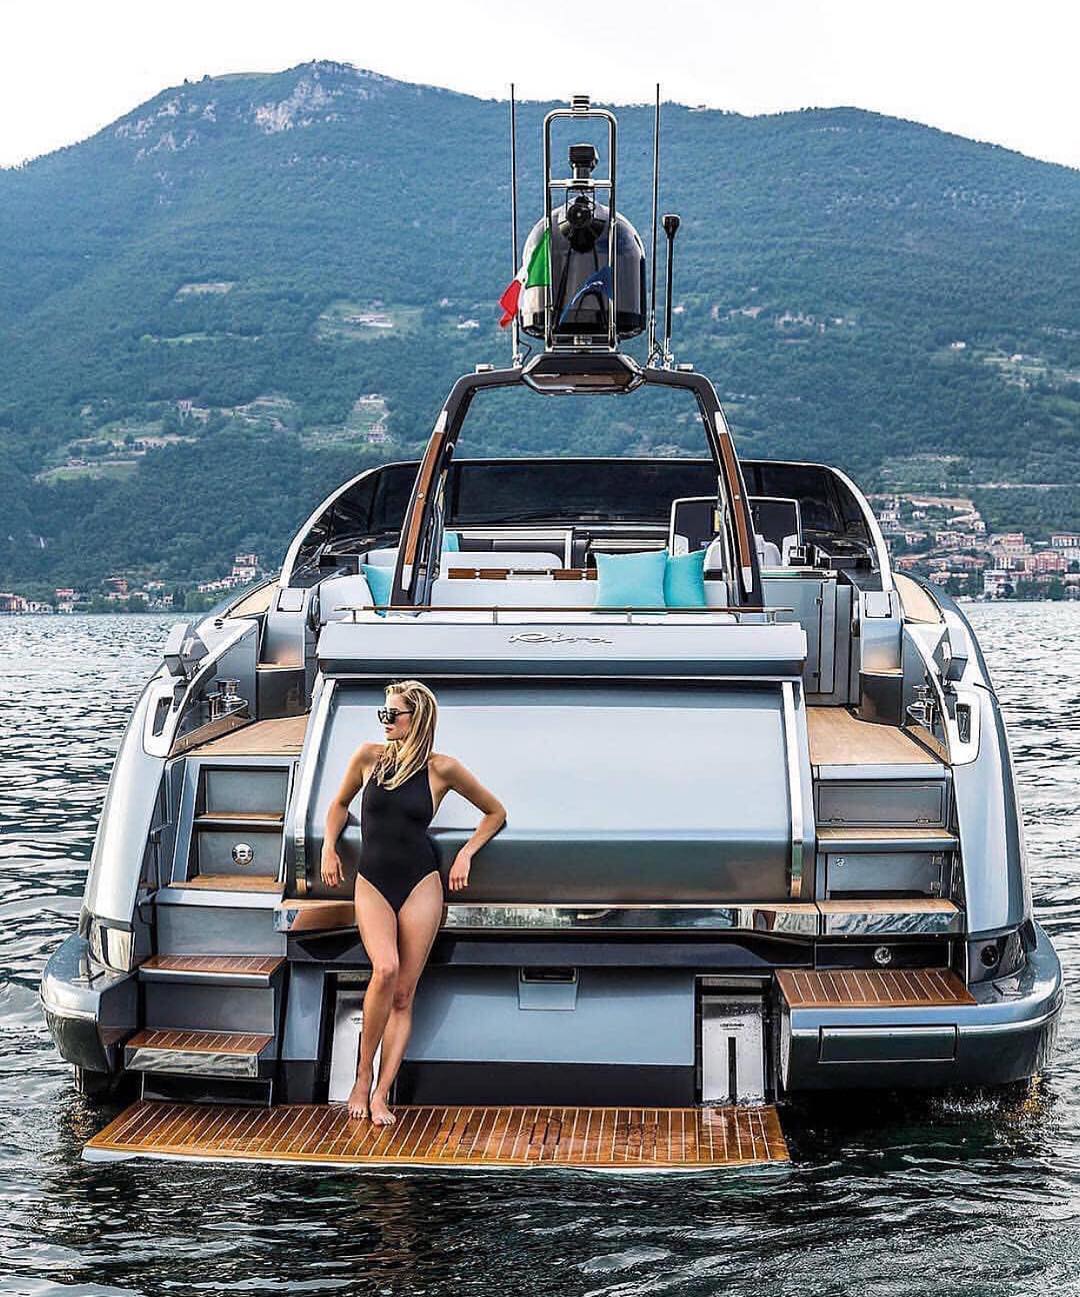 The Rich Kids Of Instagram Flaunt Their Extravagant Lifestyles